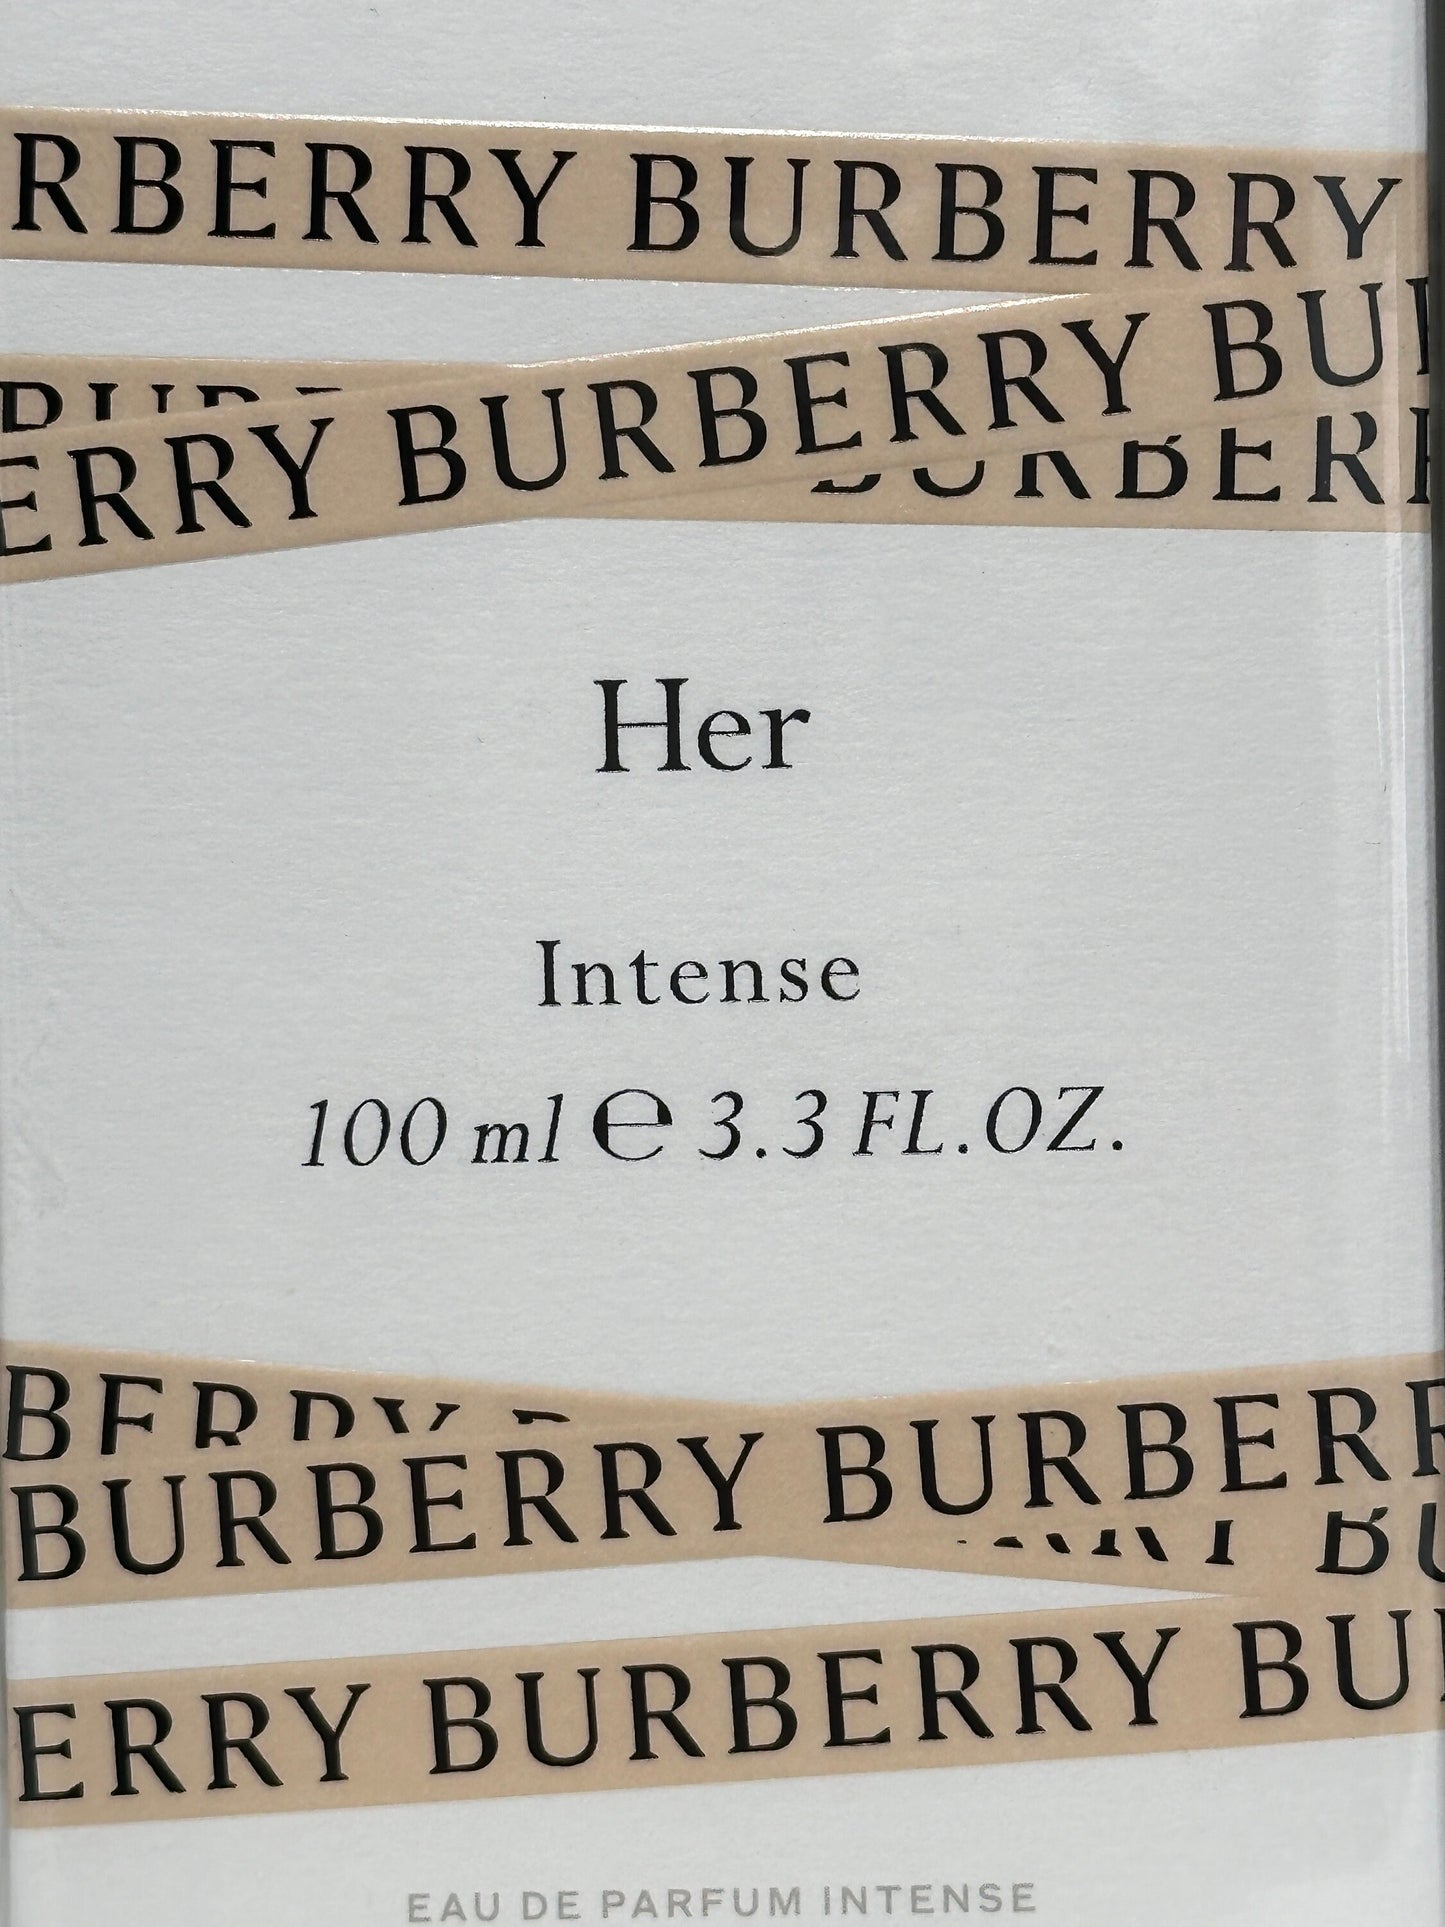 BURBERRY HER INTENSE EAU DE PARFUM NEW IN BOX SEALED 100ML SPRAY AS SHOWN.